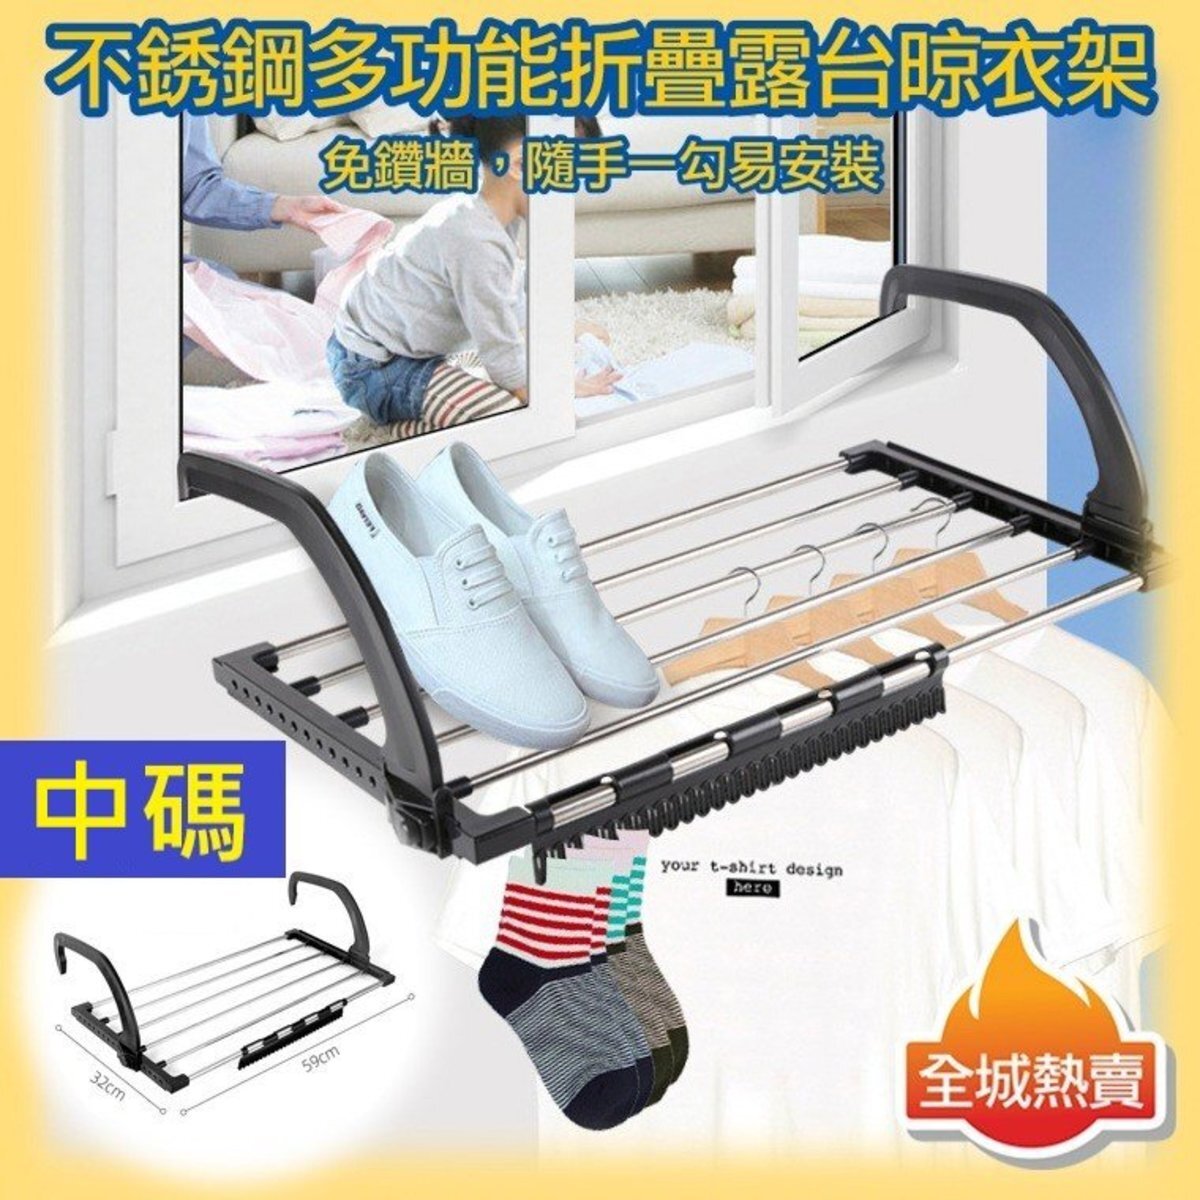 [Medium] Foldable drying rack balcony window drying rack towel socks storage rack